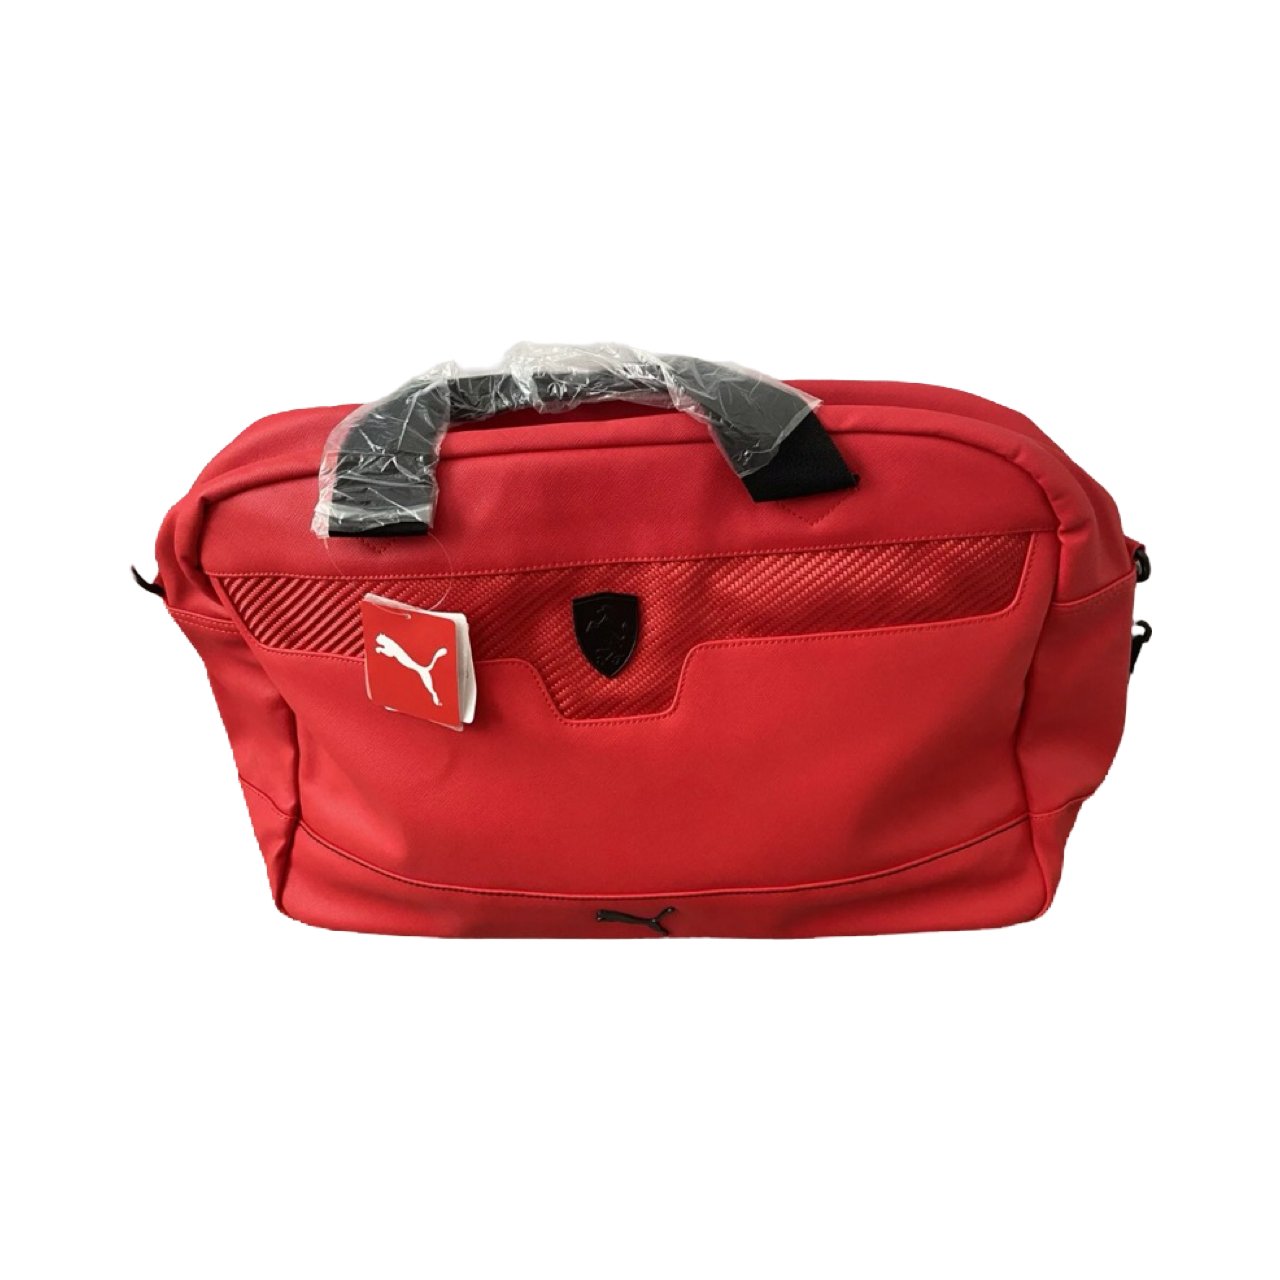 Puma Ferrari Red Large Bag LS3 Weekender in Faux Leather- 32L - Soul and Sense Streetwear